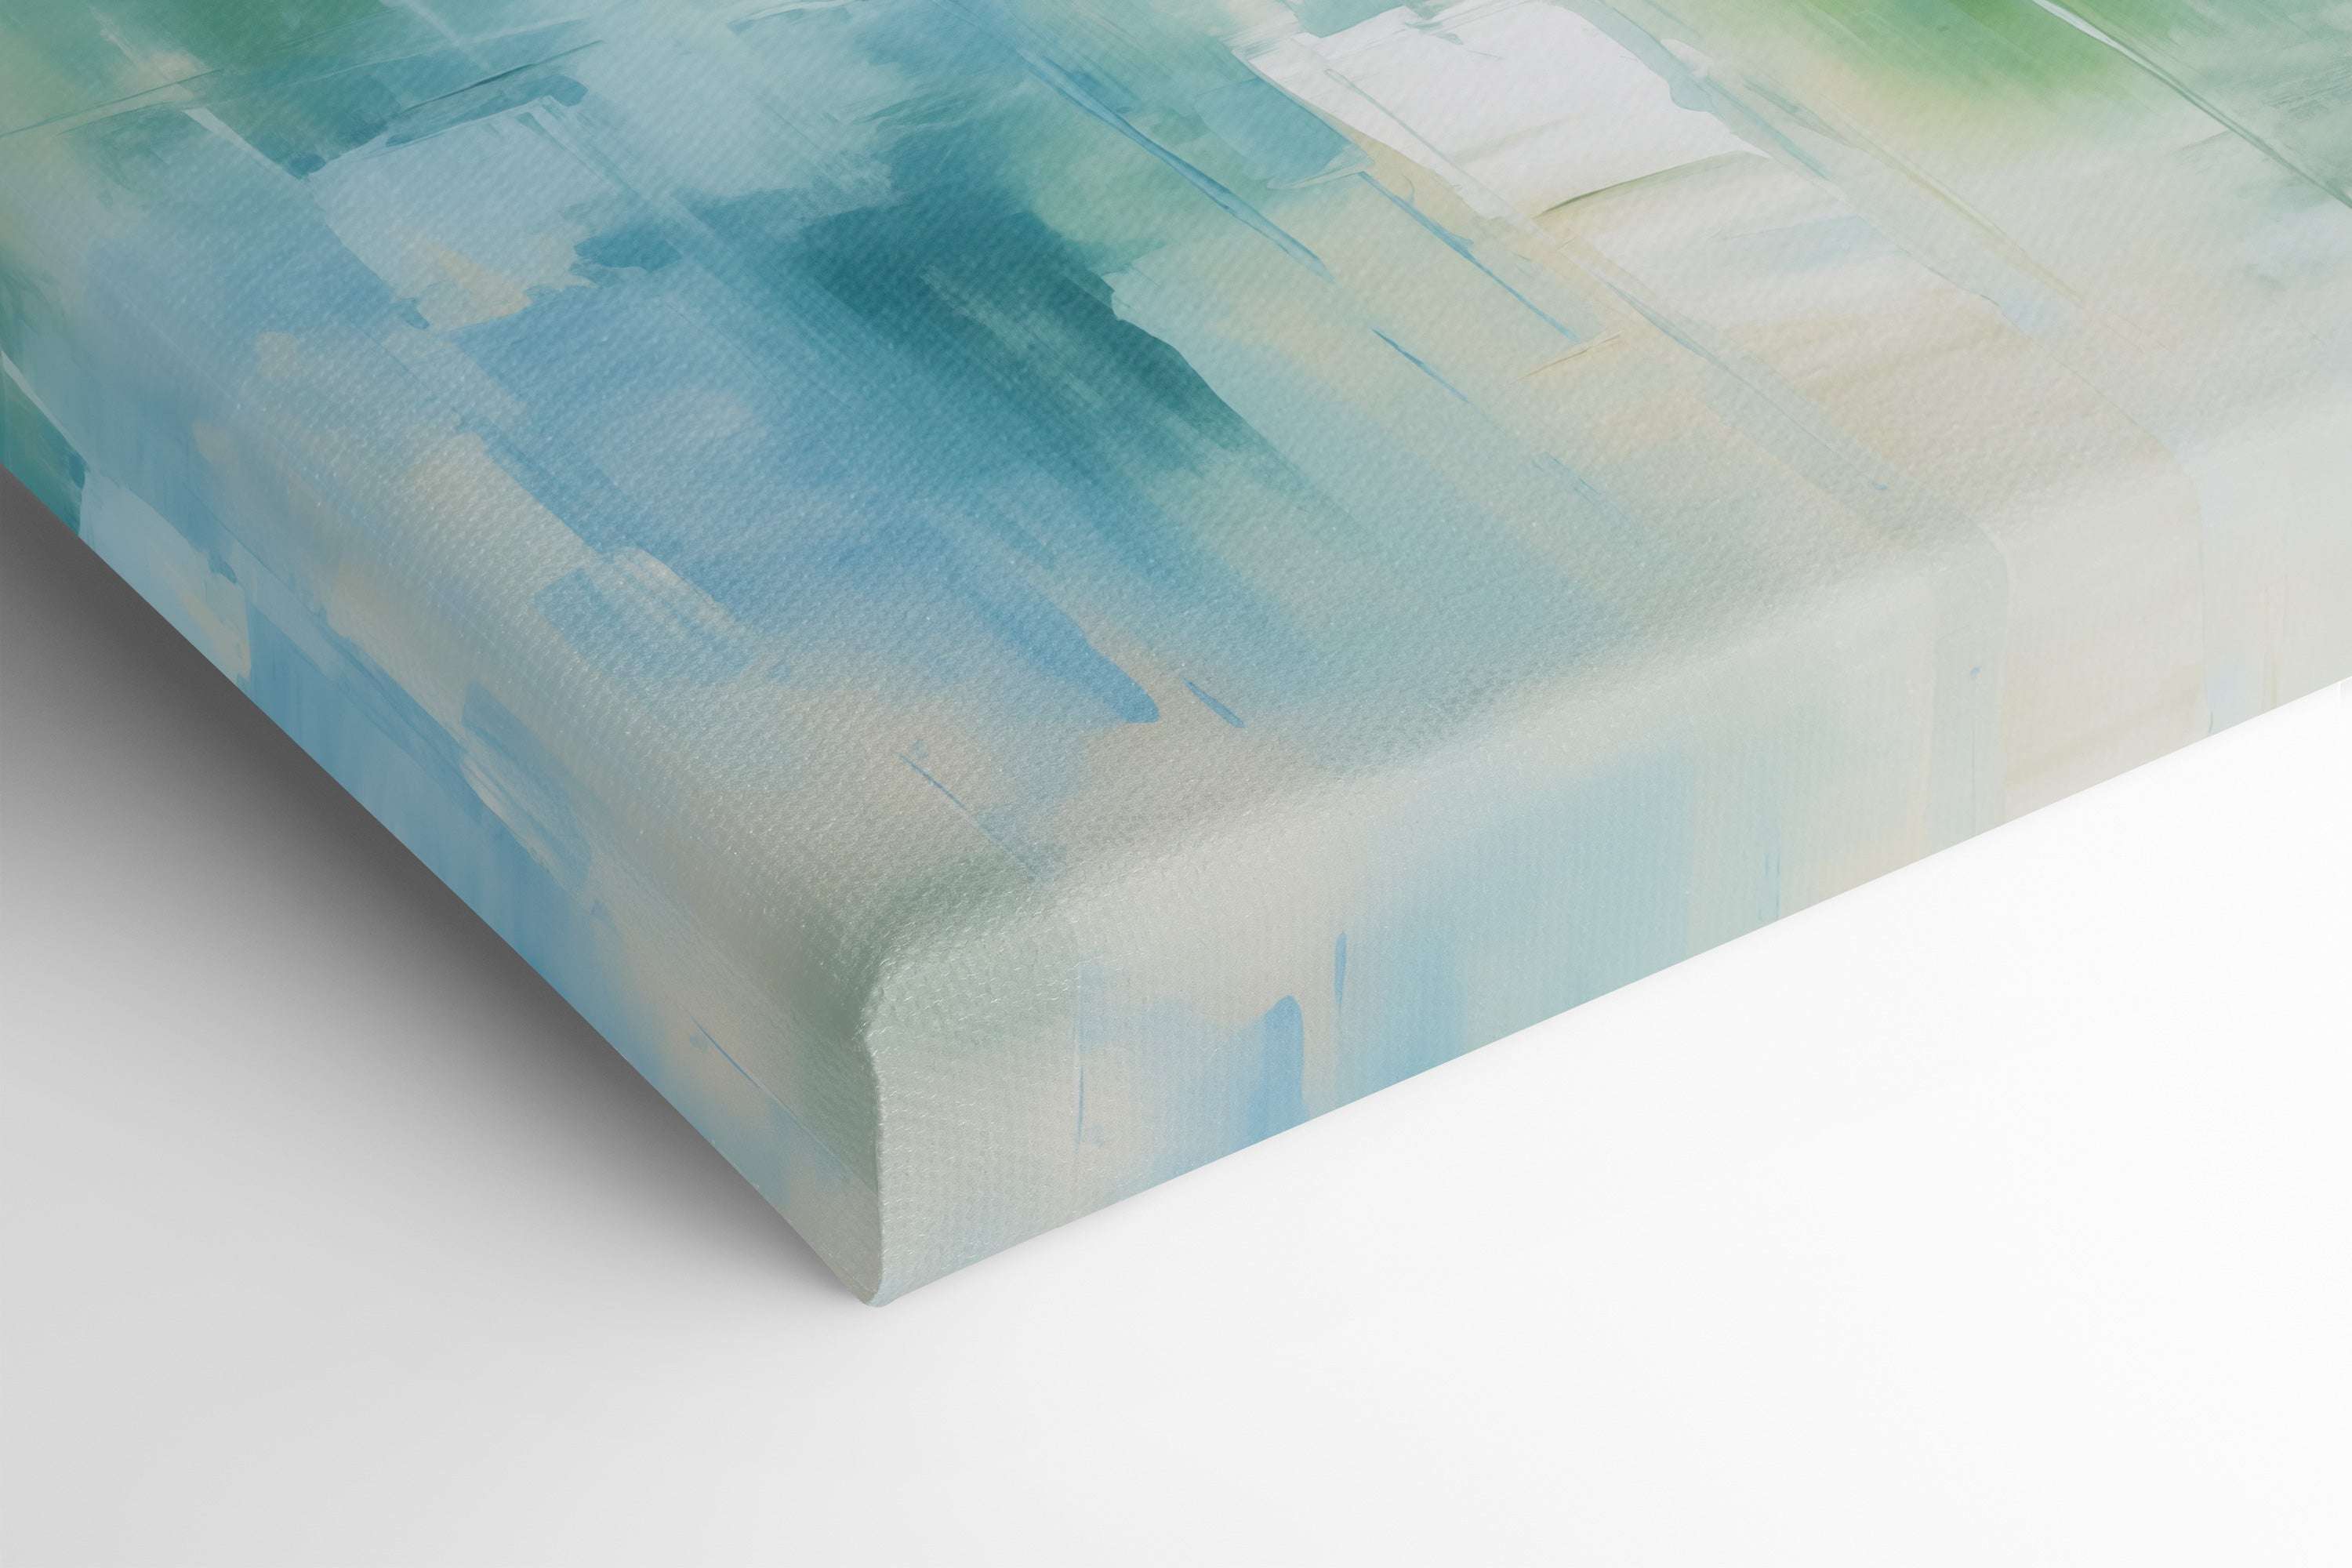 Serene Blue and Green Abstract Shoreline - Canvas Print - Artoholica Ready to Hang Canvas Print